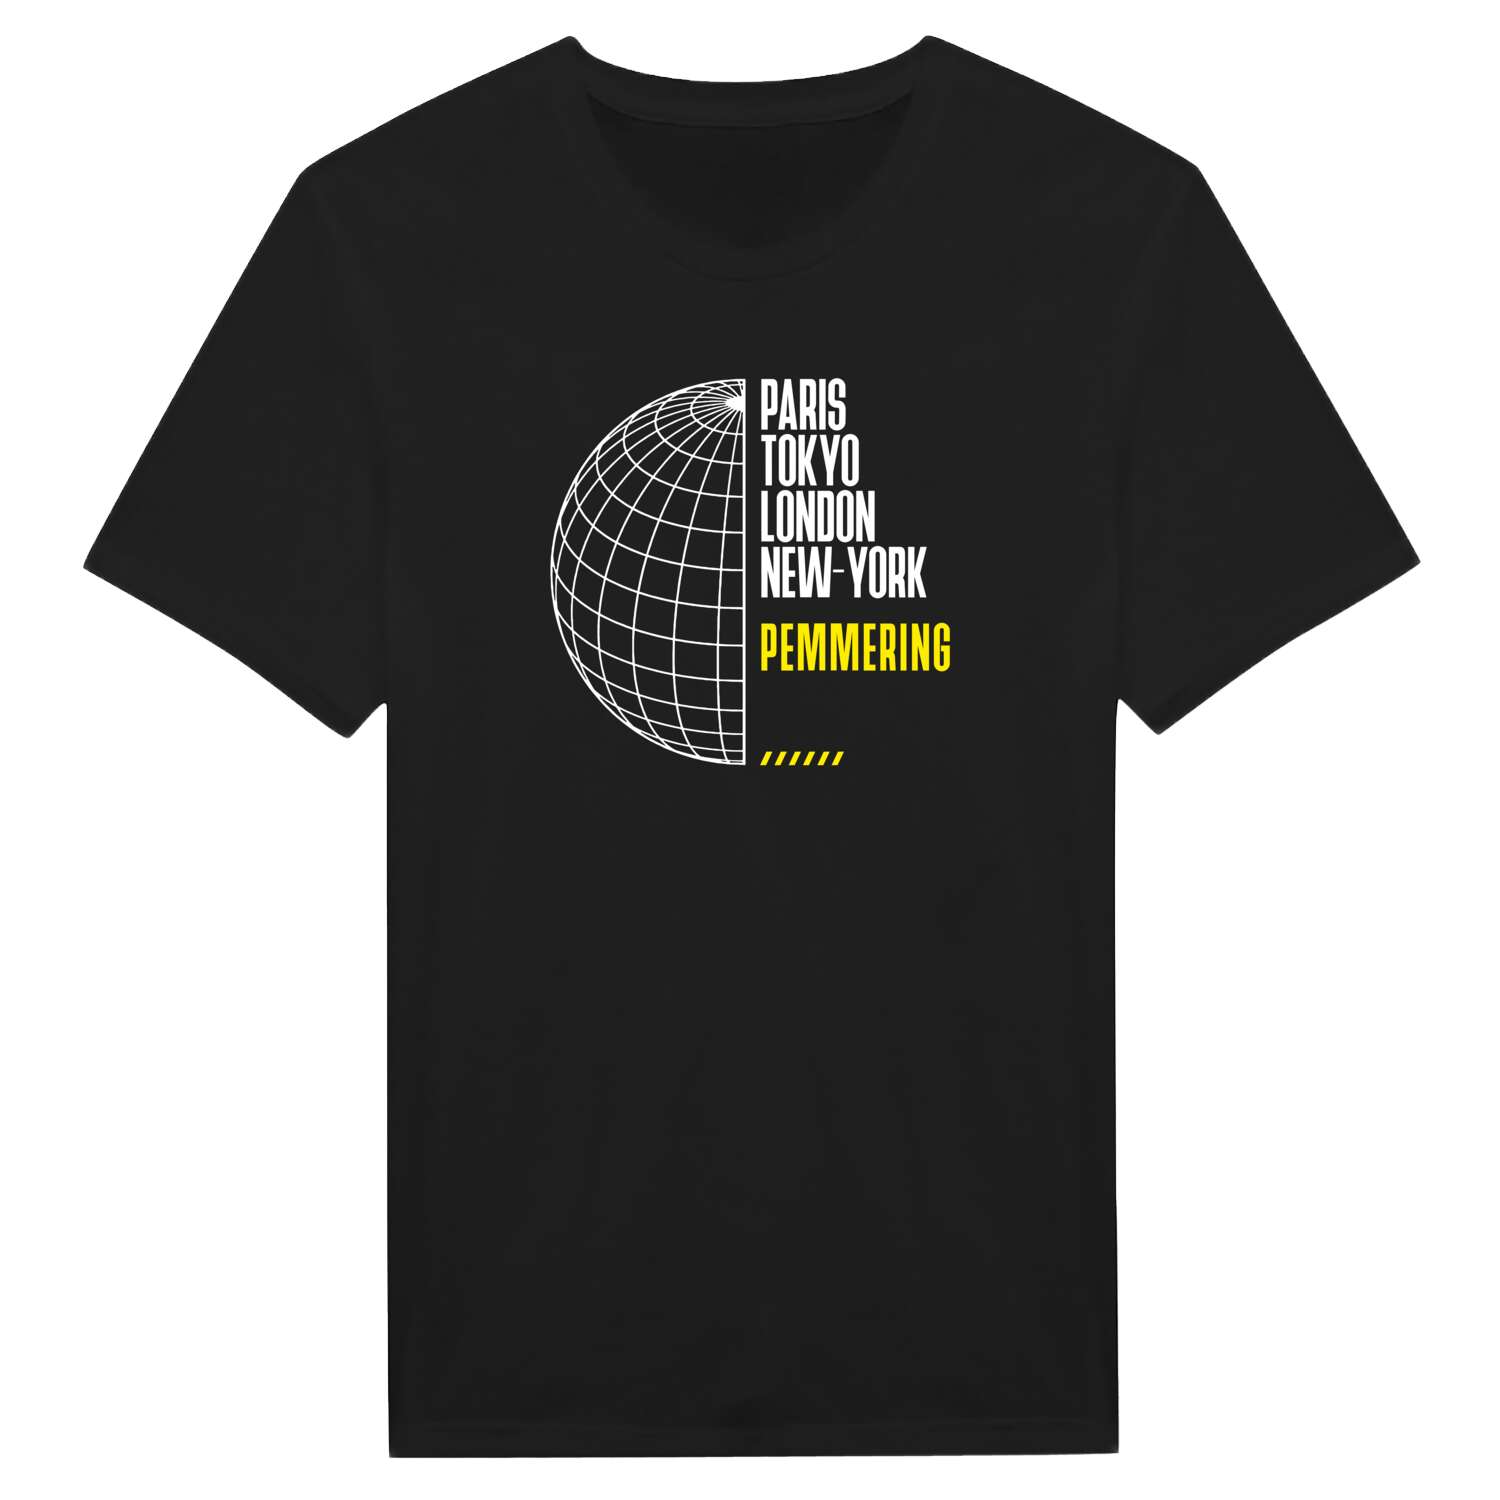 Pemmering T-Shirt »Paris Tokyo London«